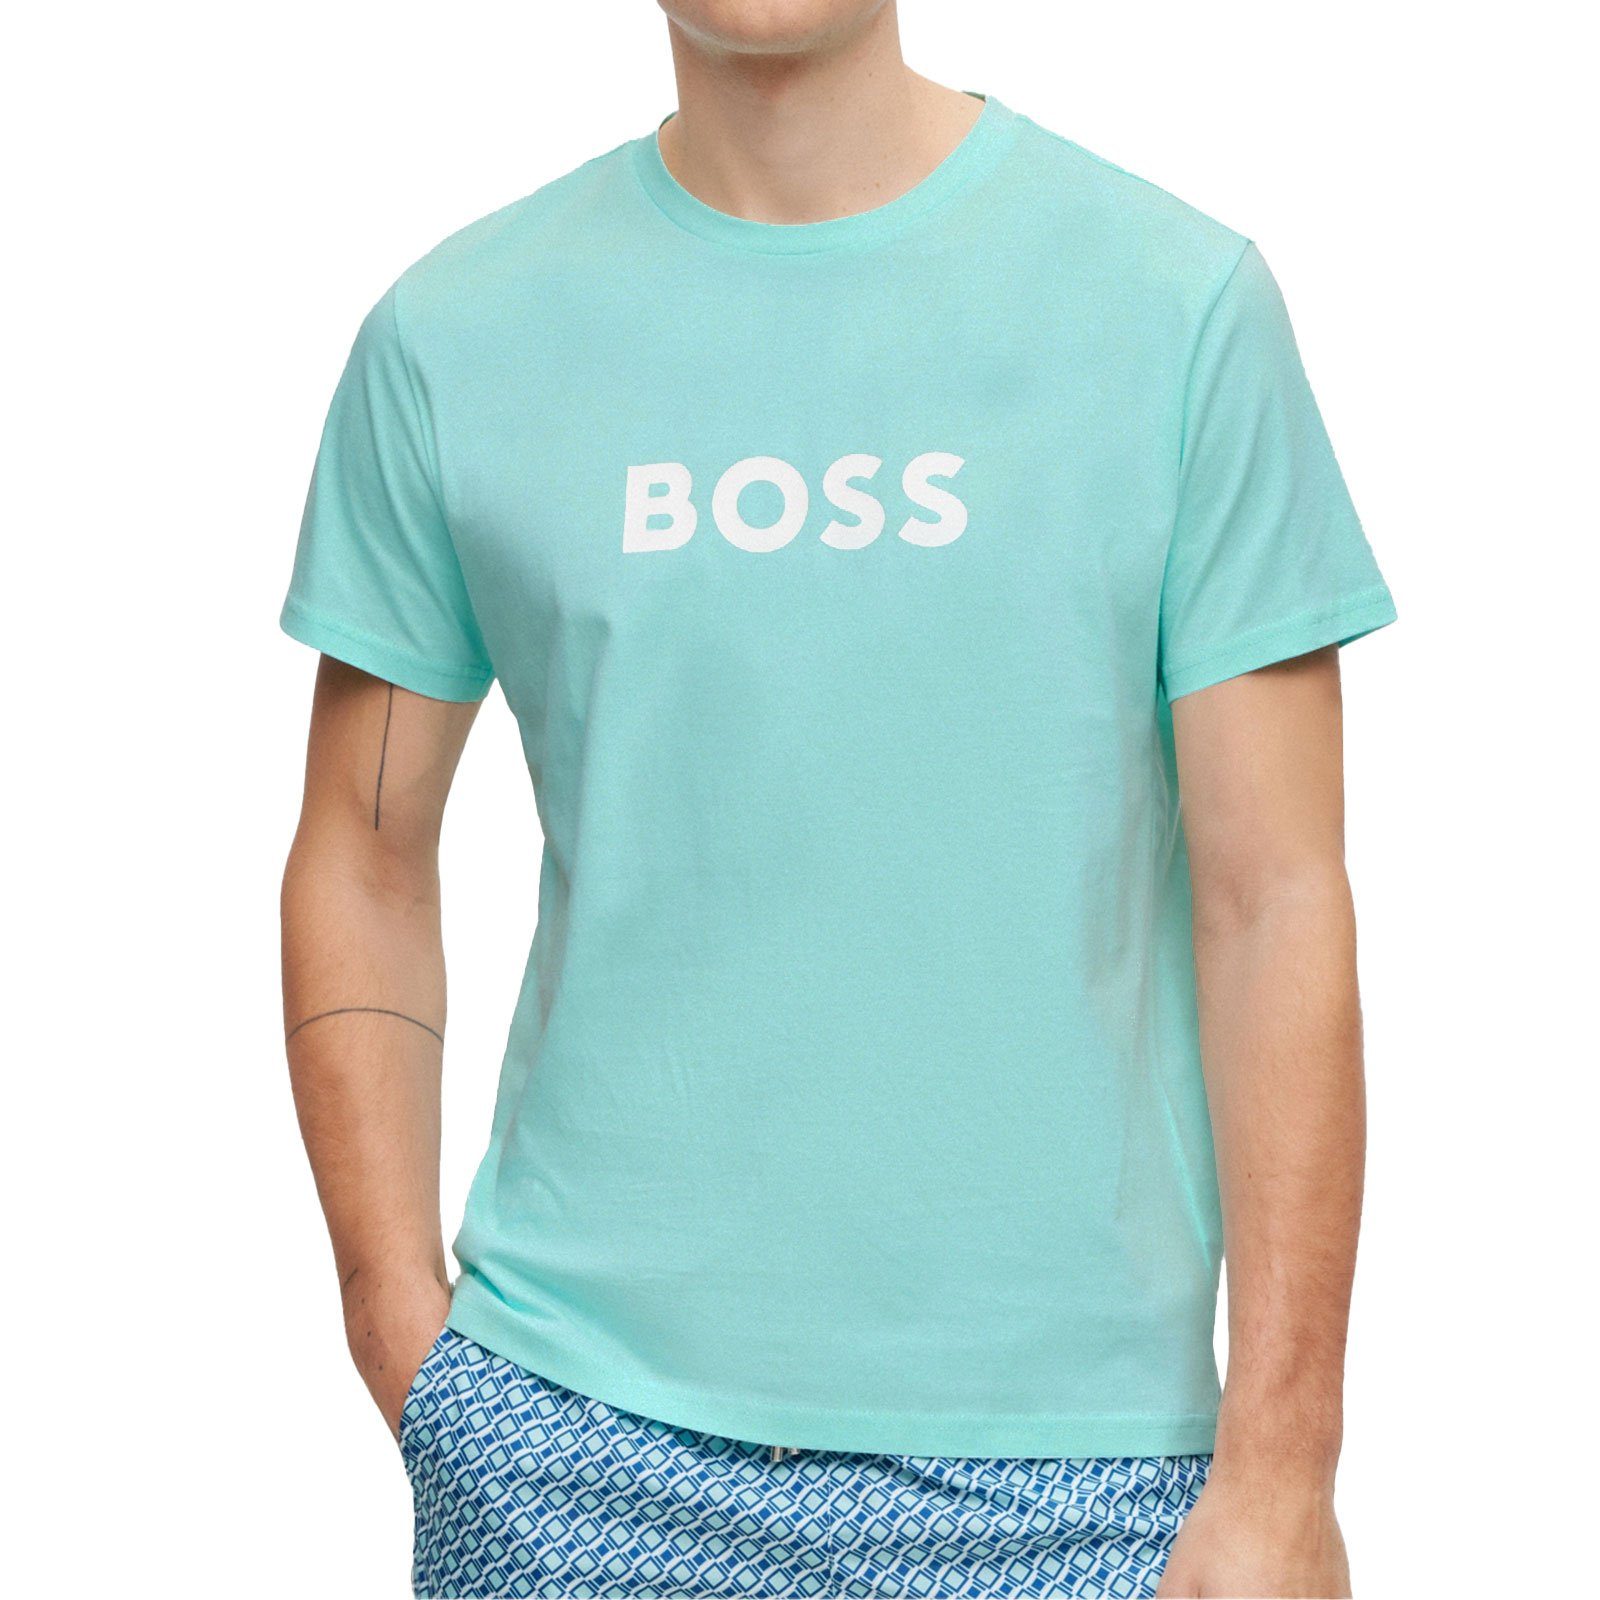 großem BOSS green open 356 Markenprint mit Brust T-Shirt T-Shirt auf RN der